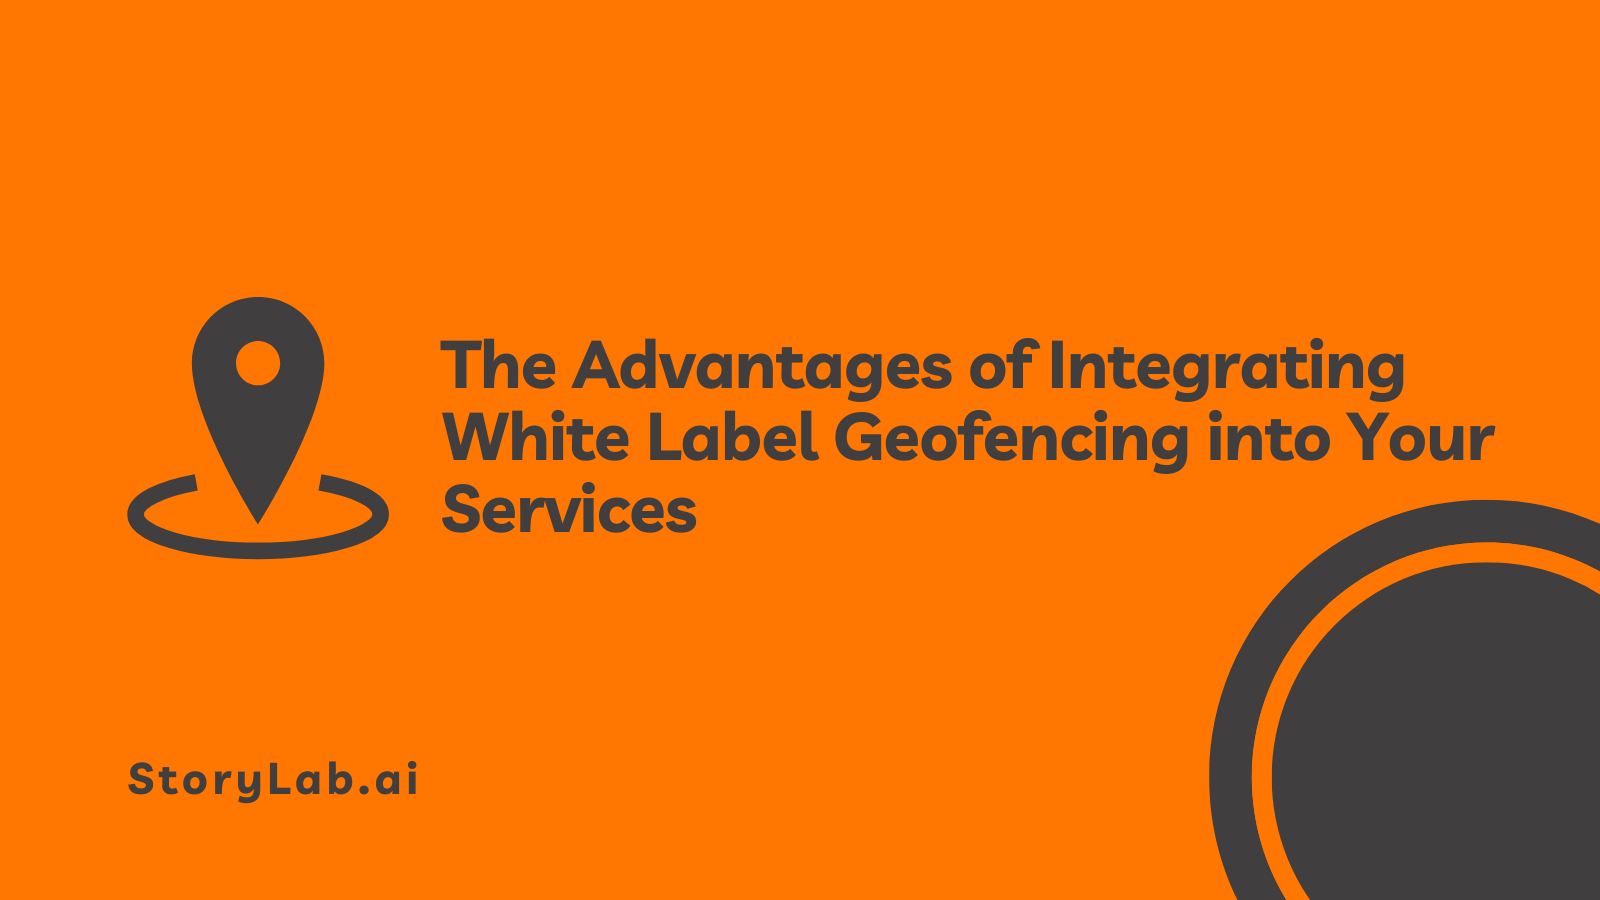 As vantagens de integrar geofencing de marca branca em seus serviços